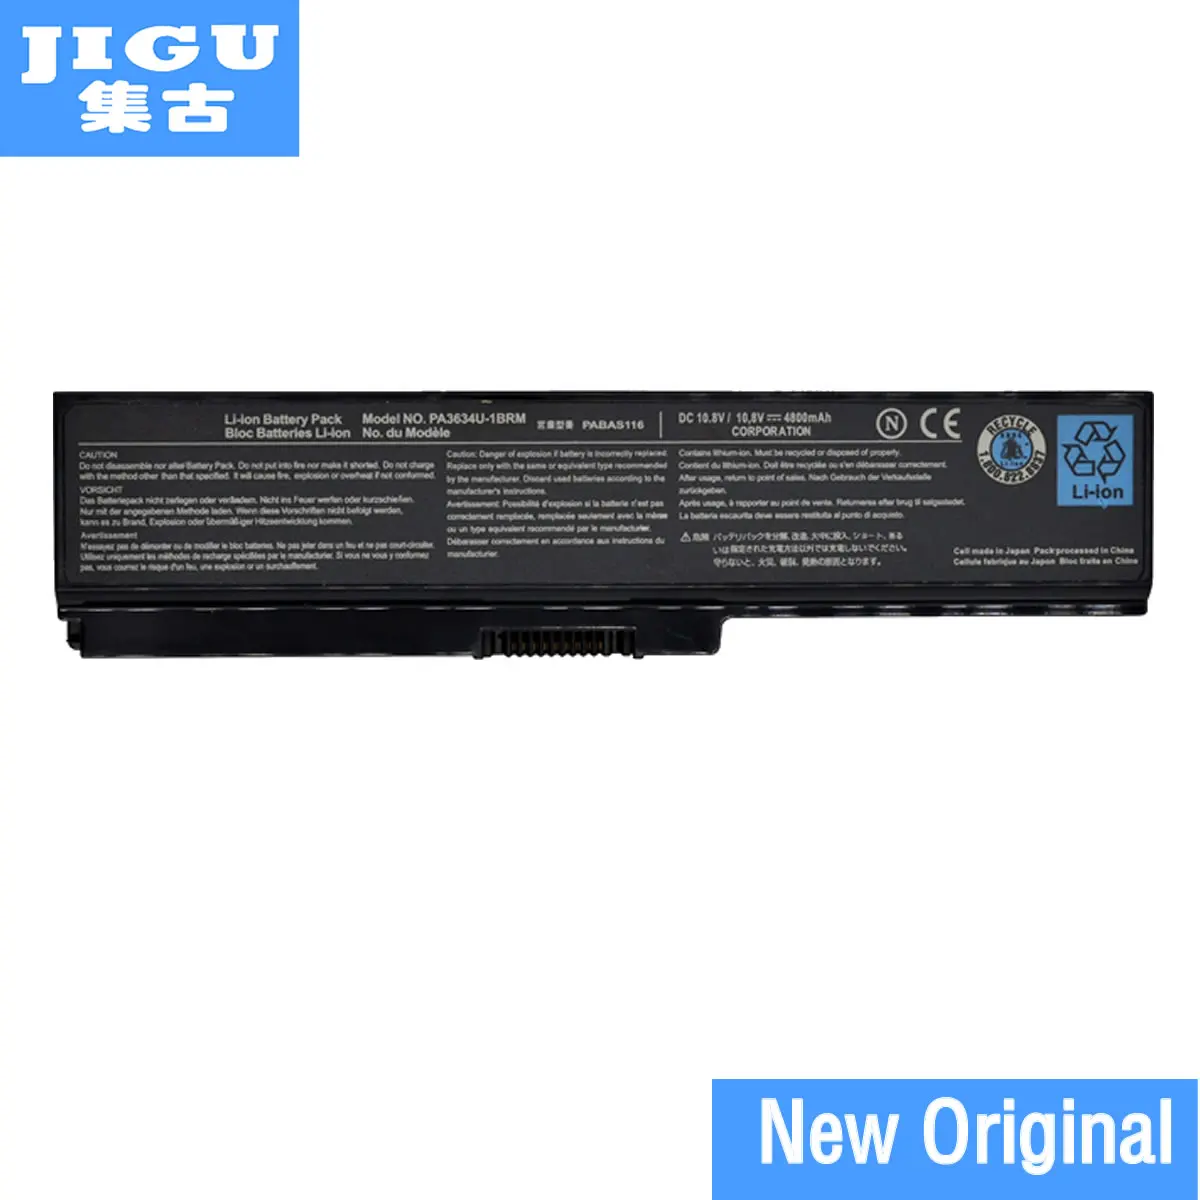 

JIGU Original Laptop Battery For Toshiba M331 M332 M333 M336 M338 M339 M511 M512 M305 M305D M500 M505 M505D M600 M640